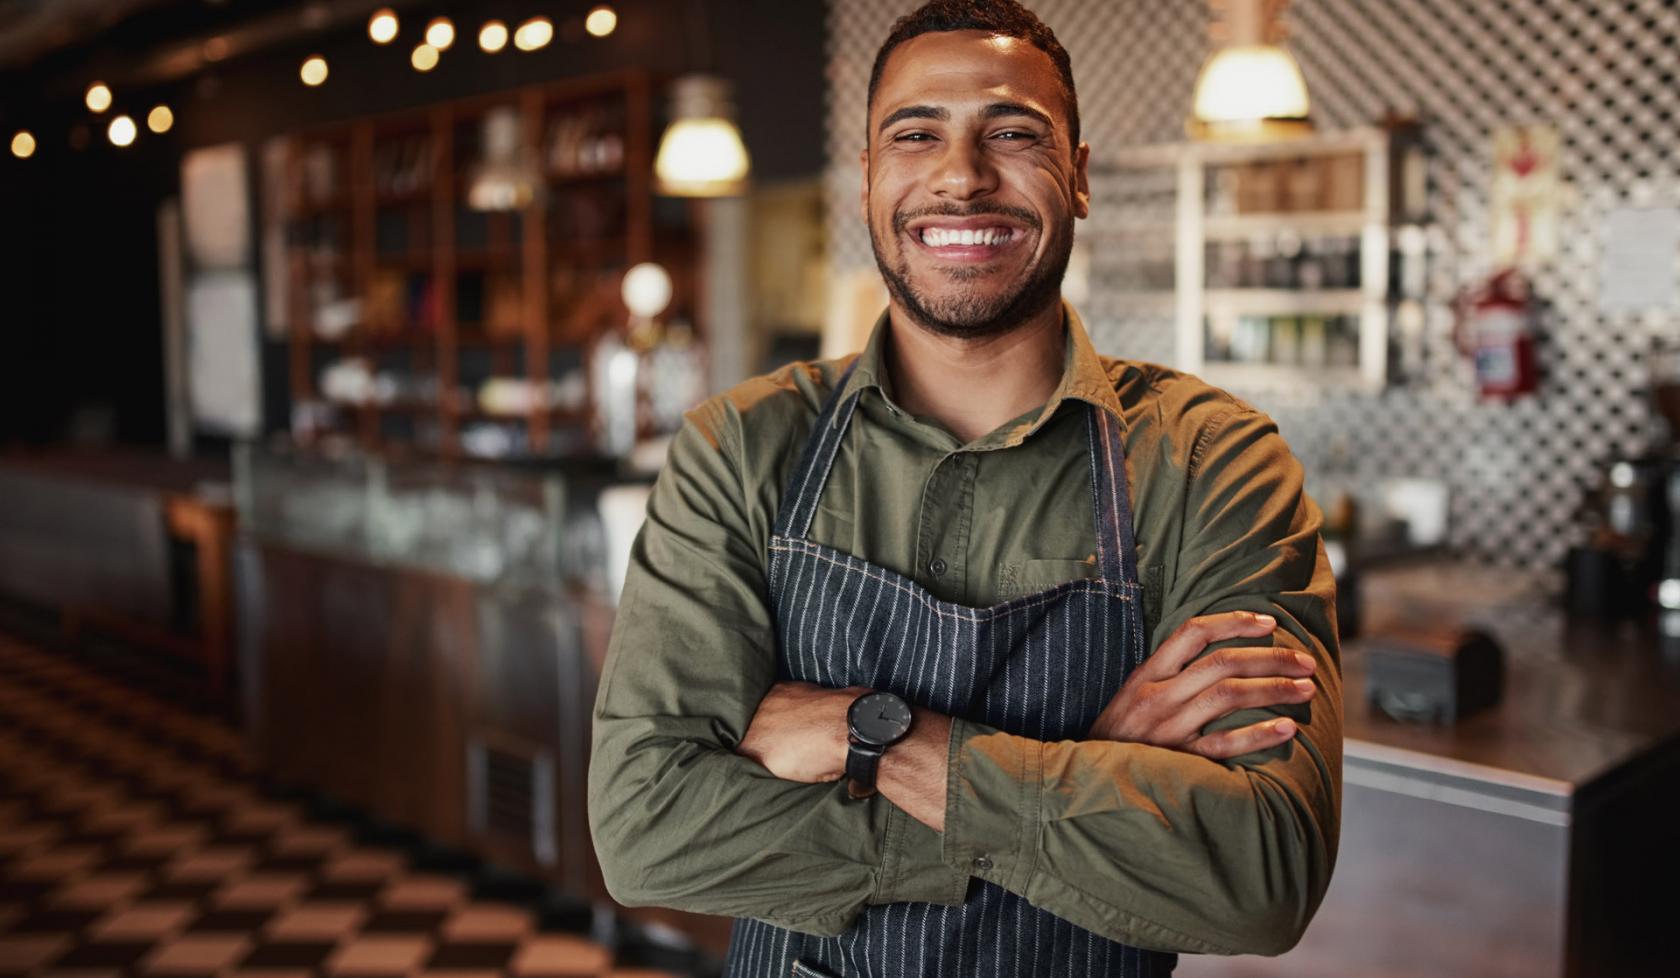 Smiling Restaurant Worker Wearing Apron